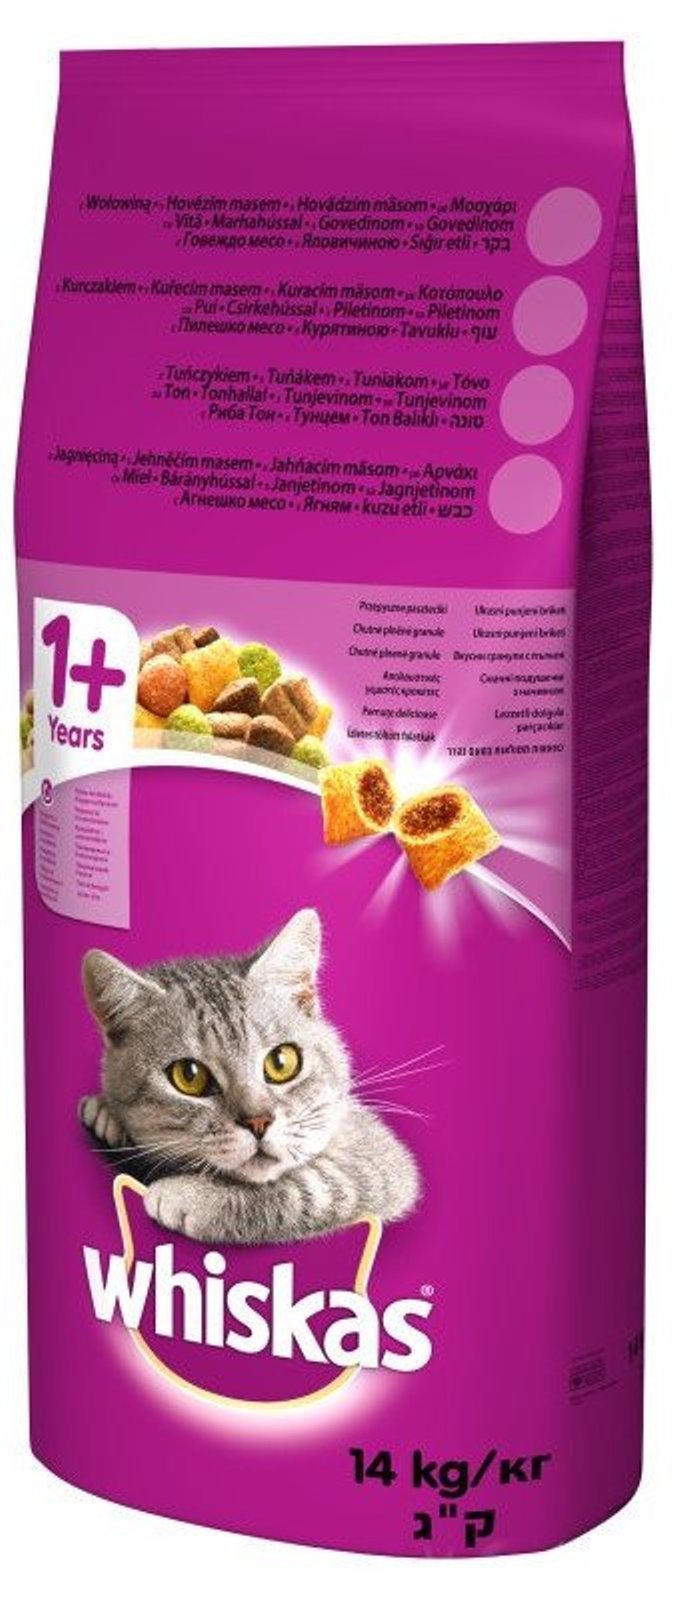 WHISKAS Tuna Katzenfutter 14kg - ZooLand.com.de | Online-Zoohandlung